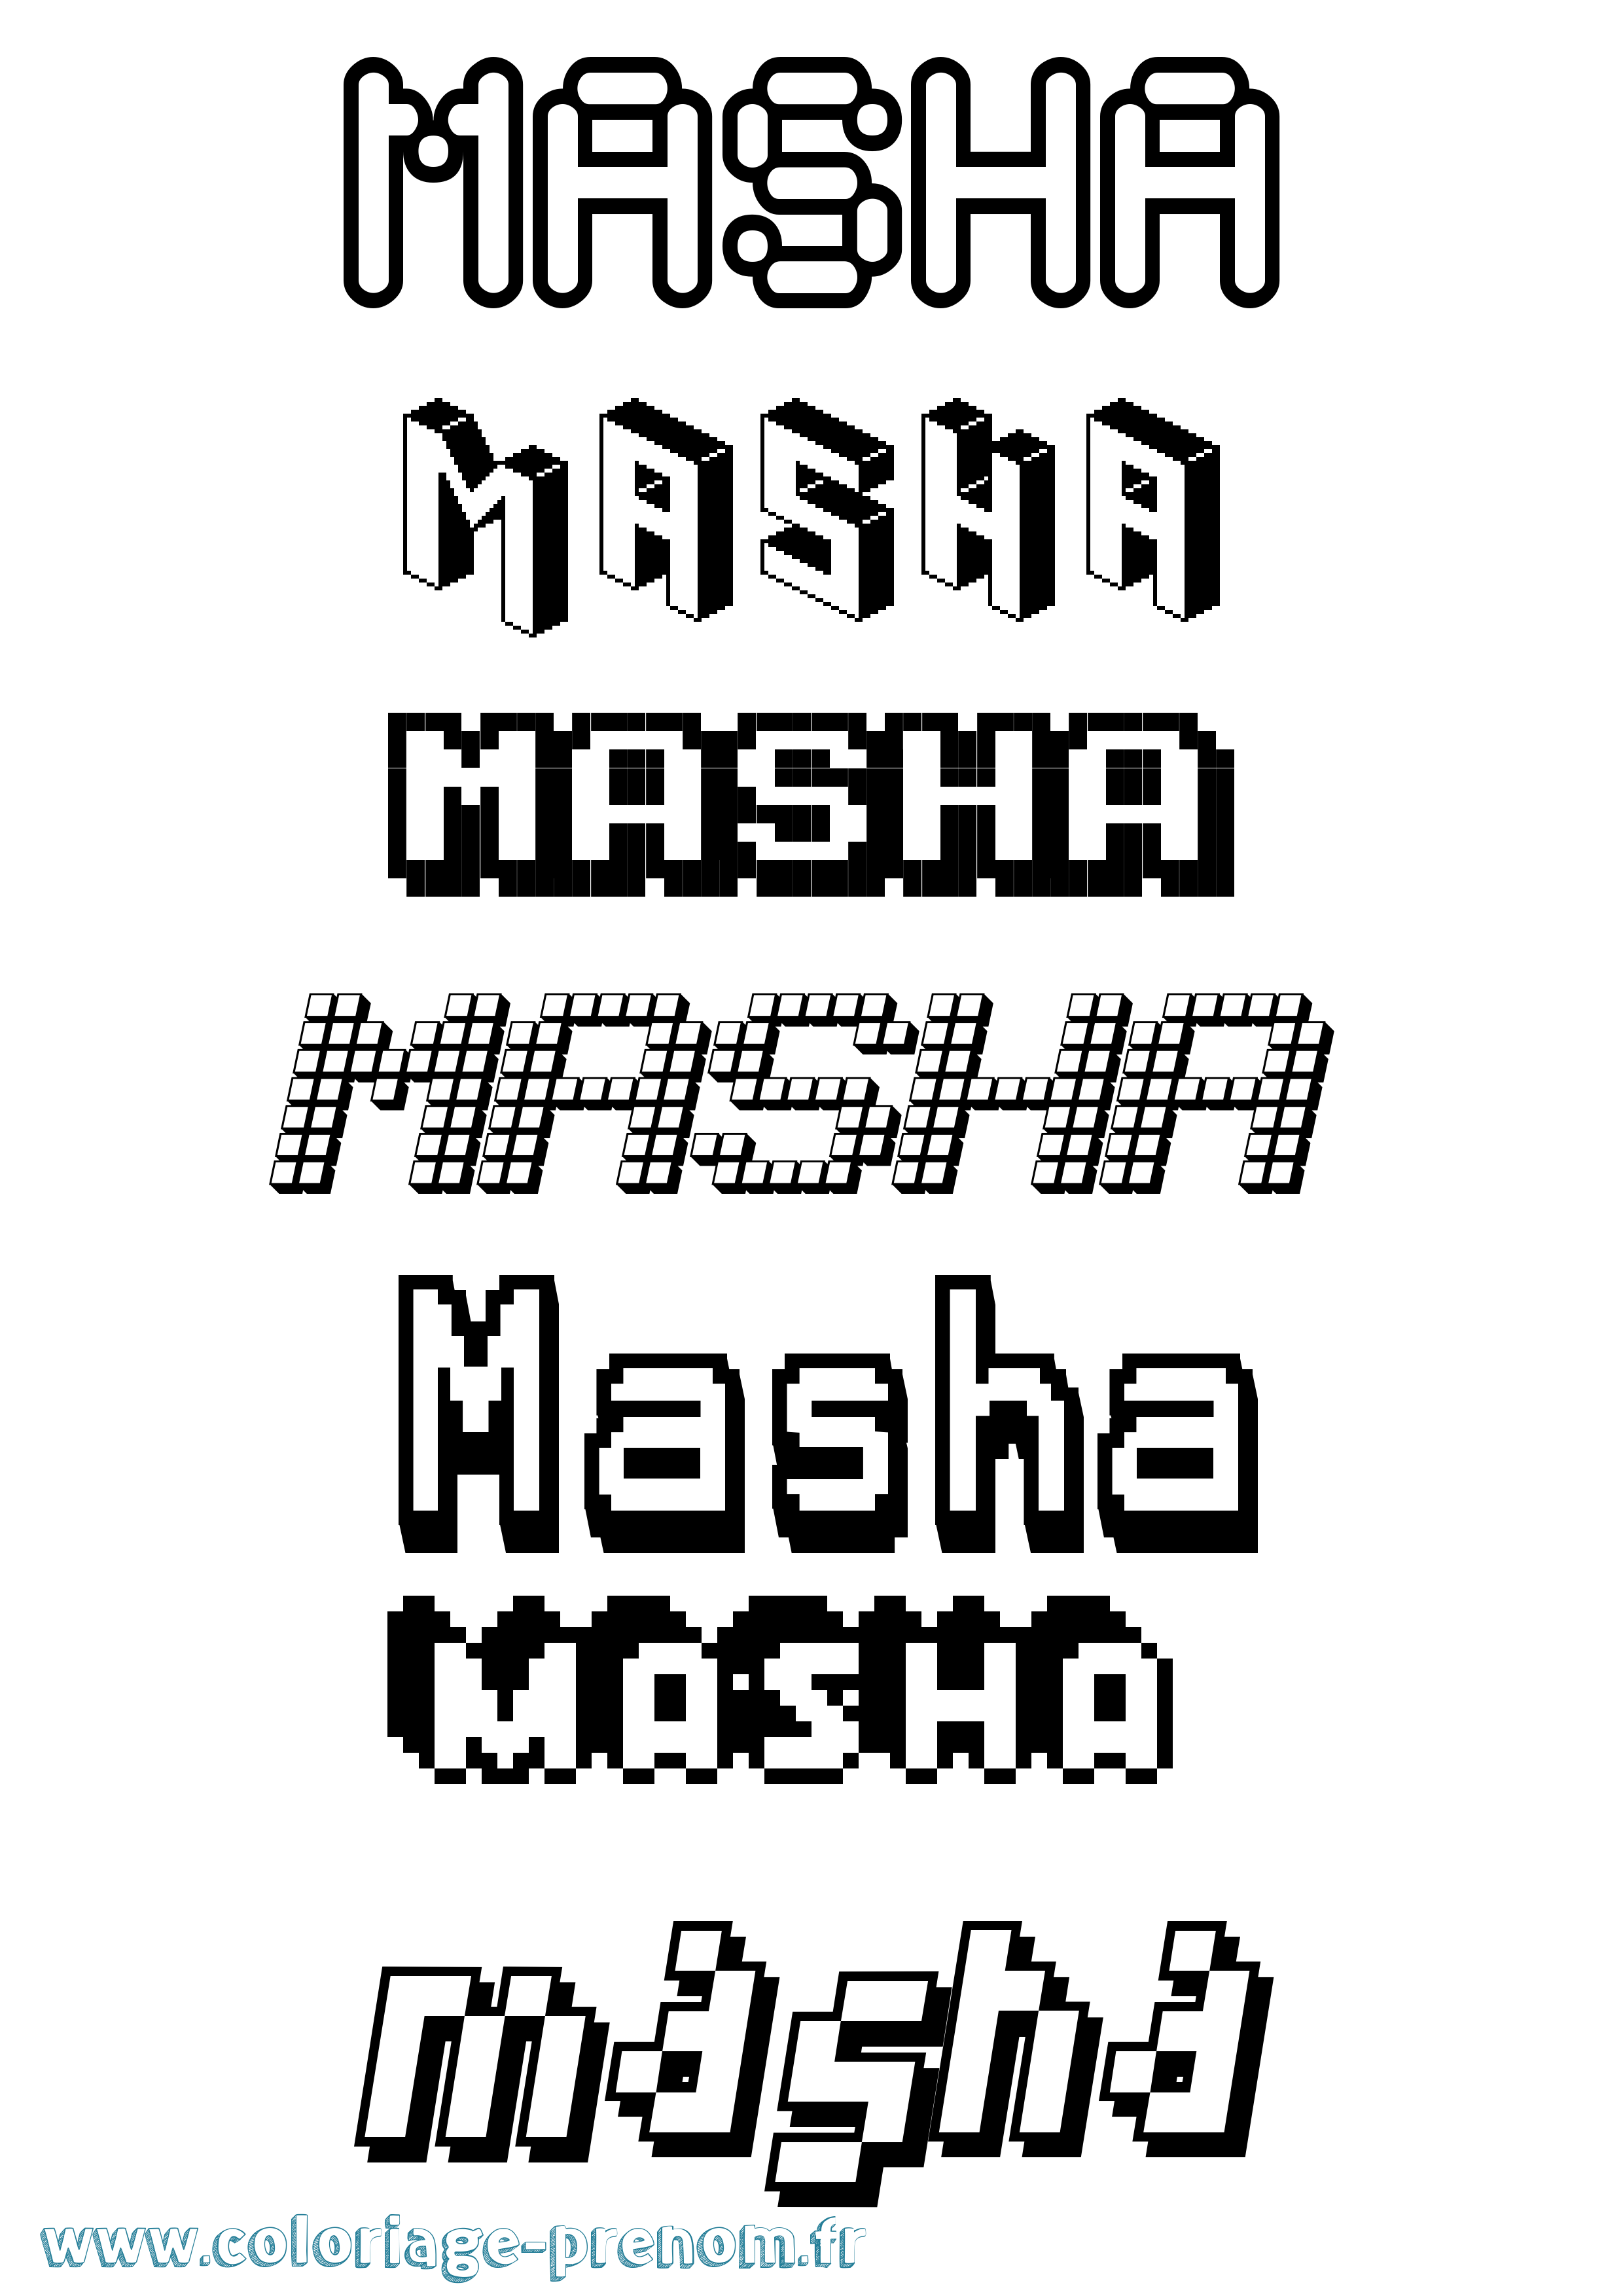 Coloriage prénom Masha Pixel